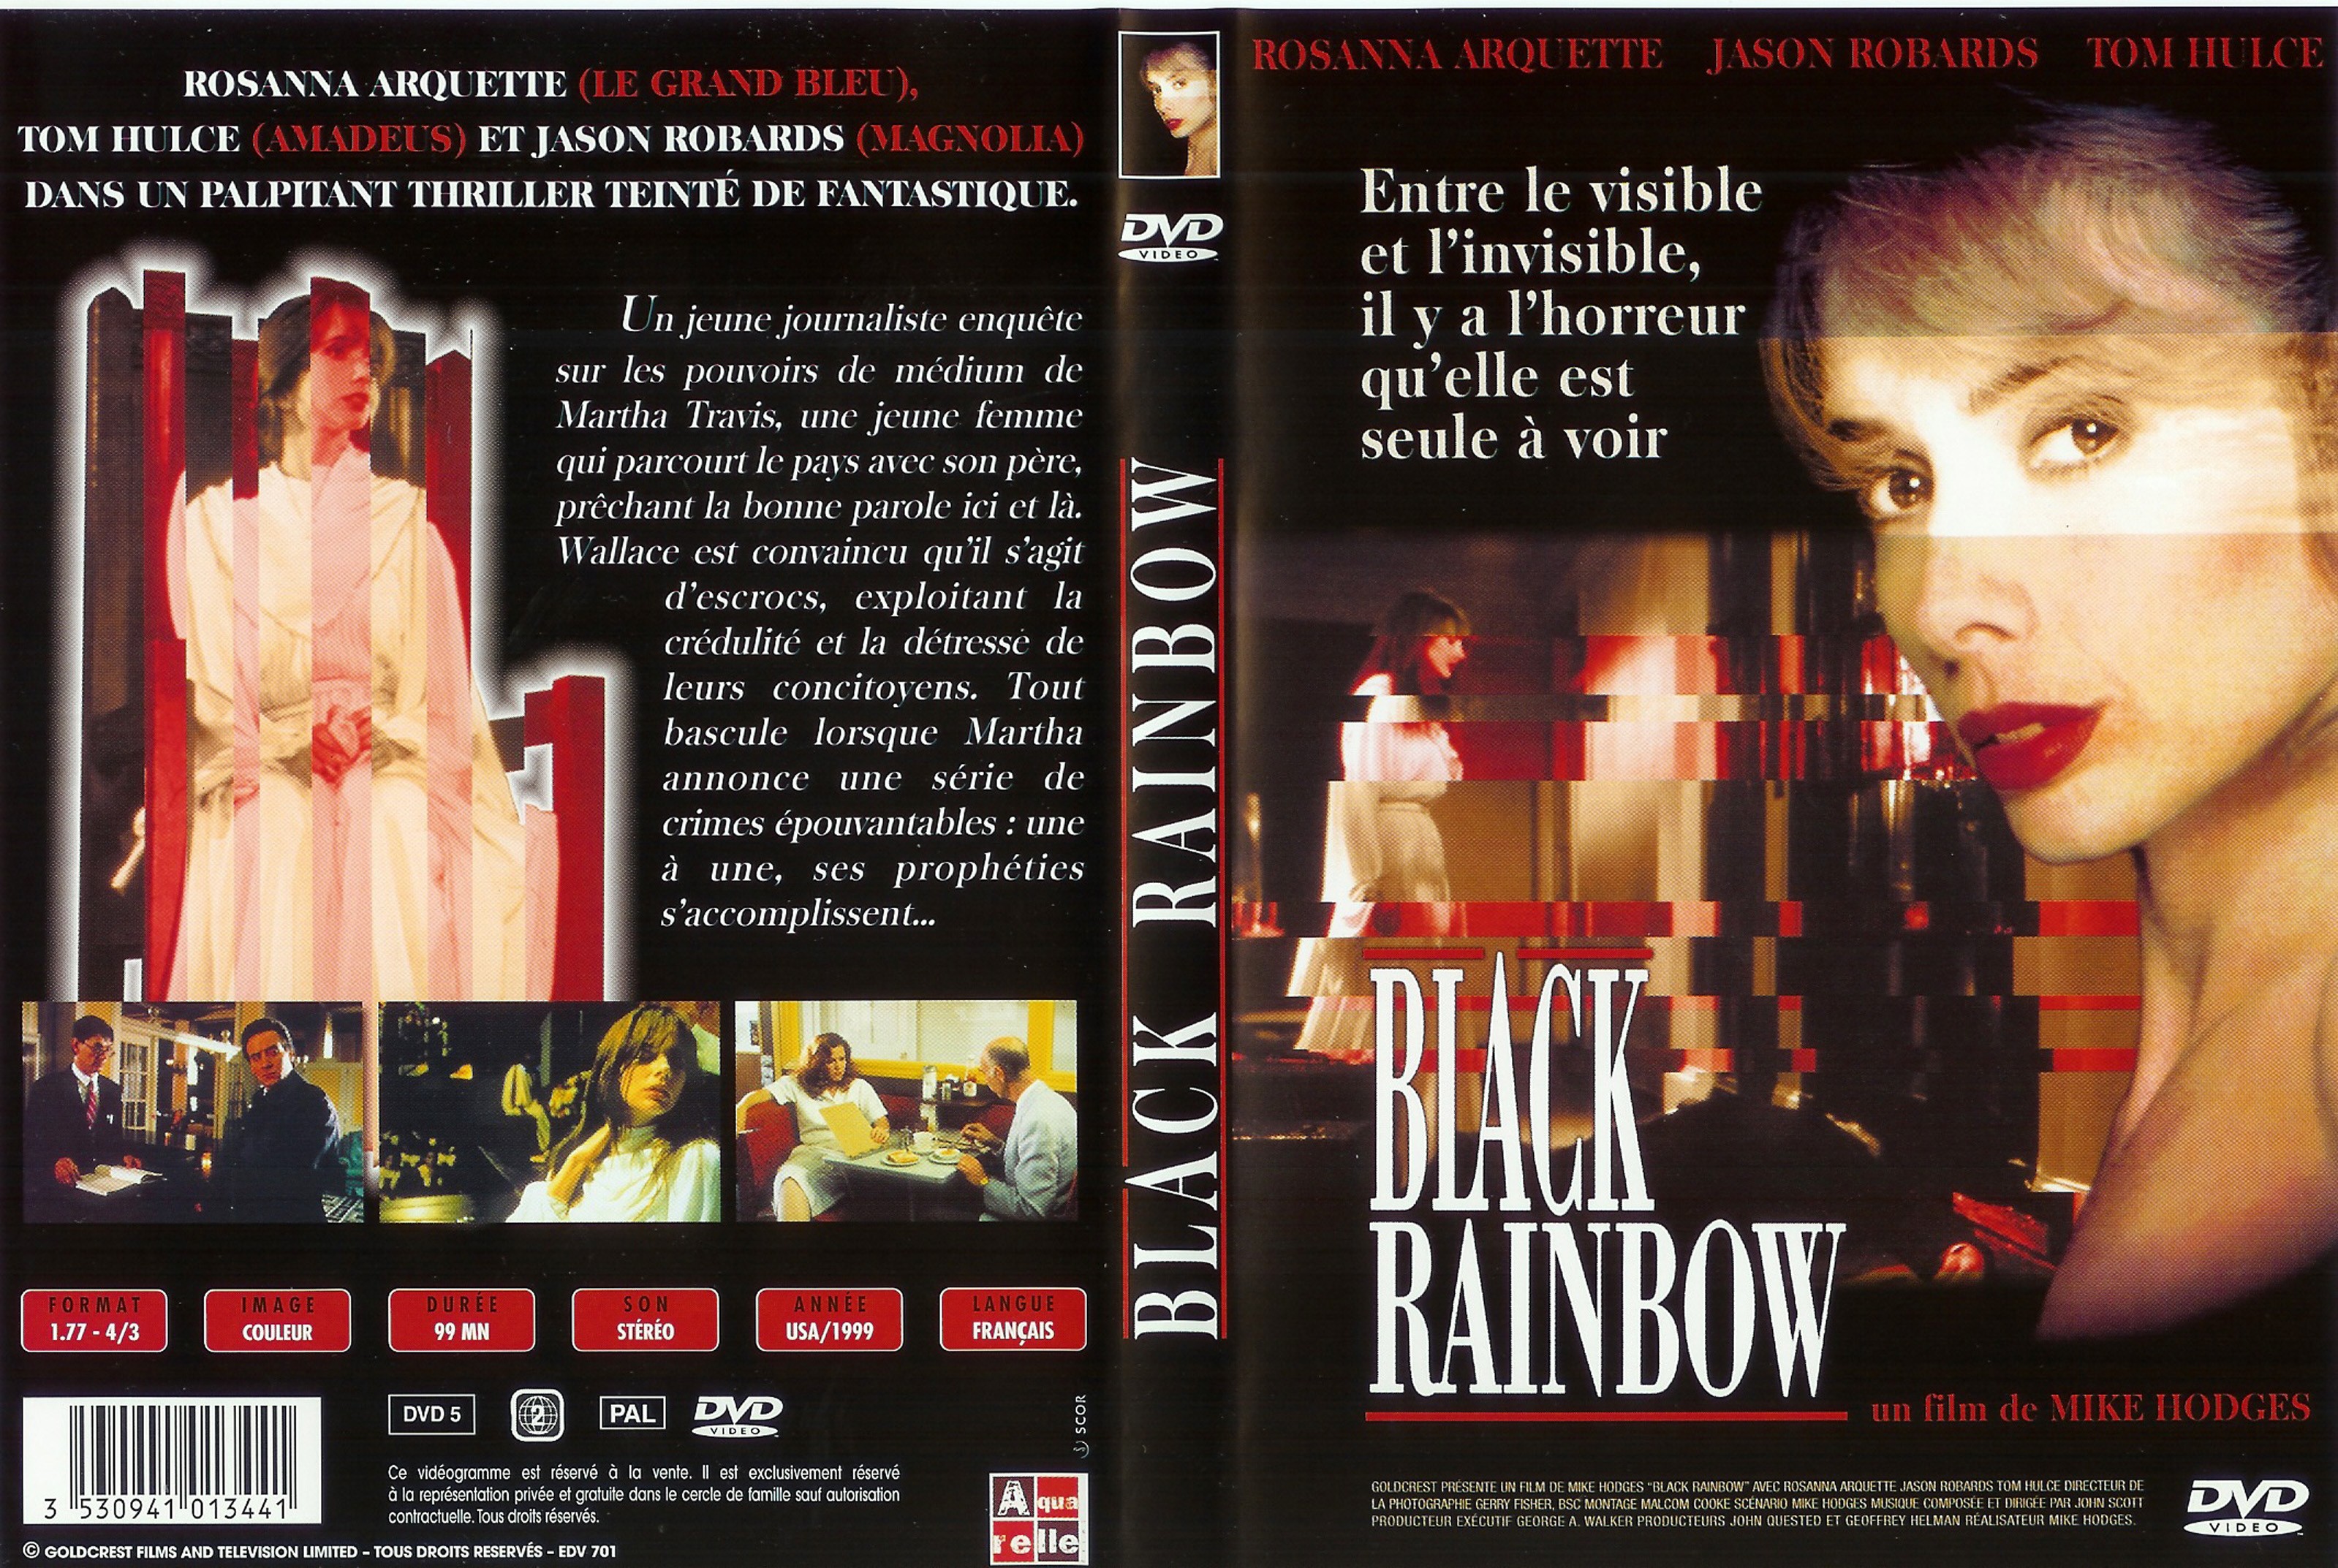 Jaquette DVD Black rainbow